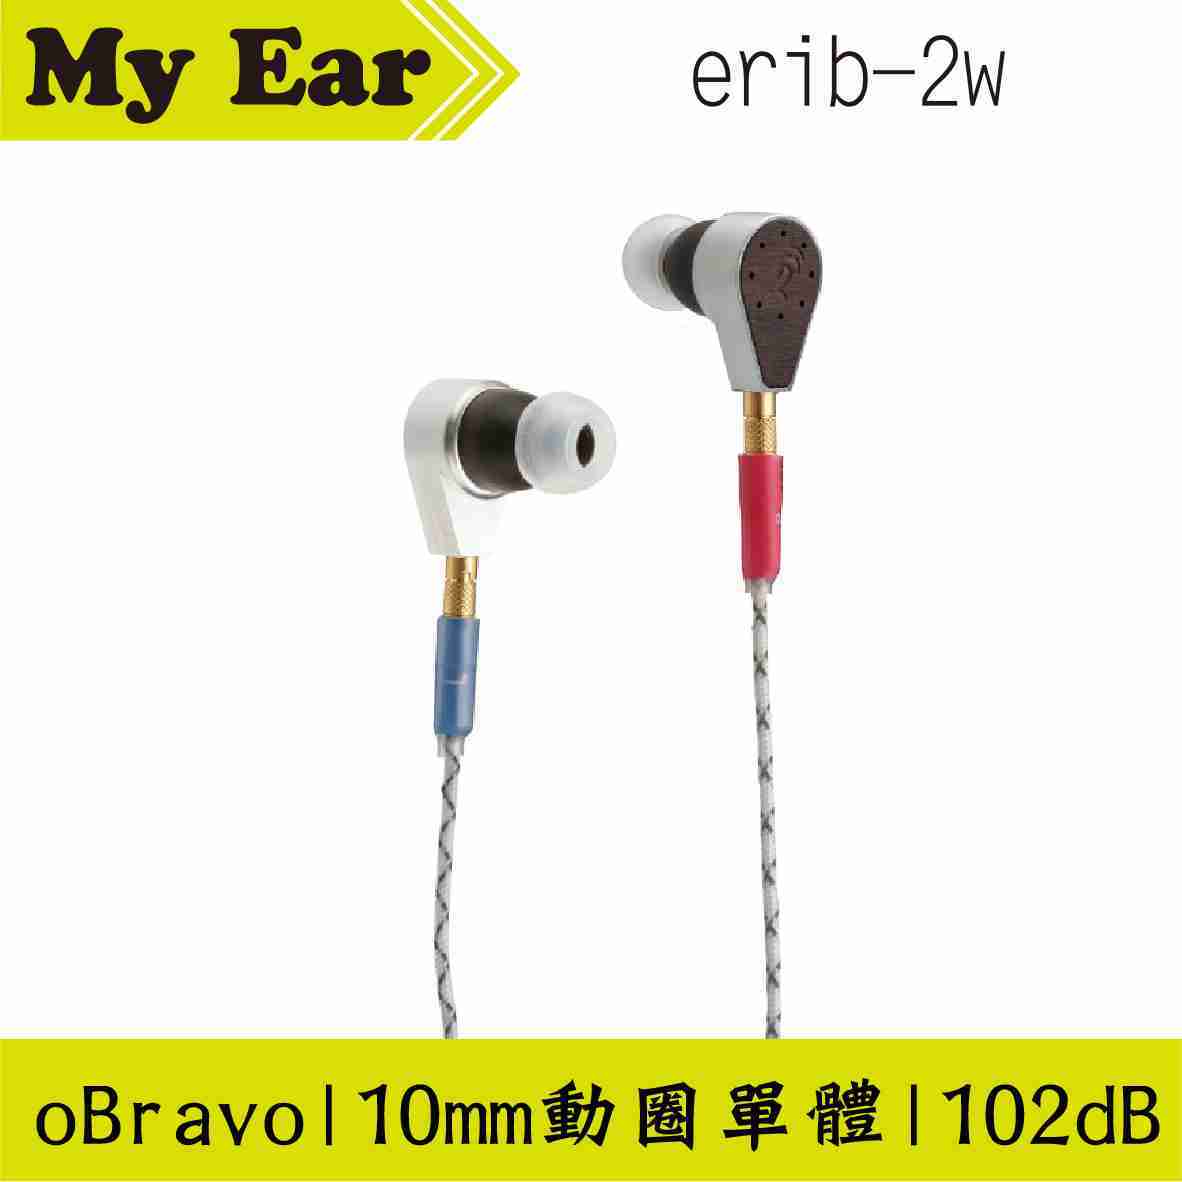 oBravo erib-2w 耳道式耳機 平面振膜 | My Ear耳機專門店